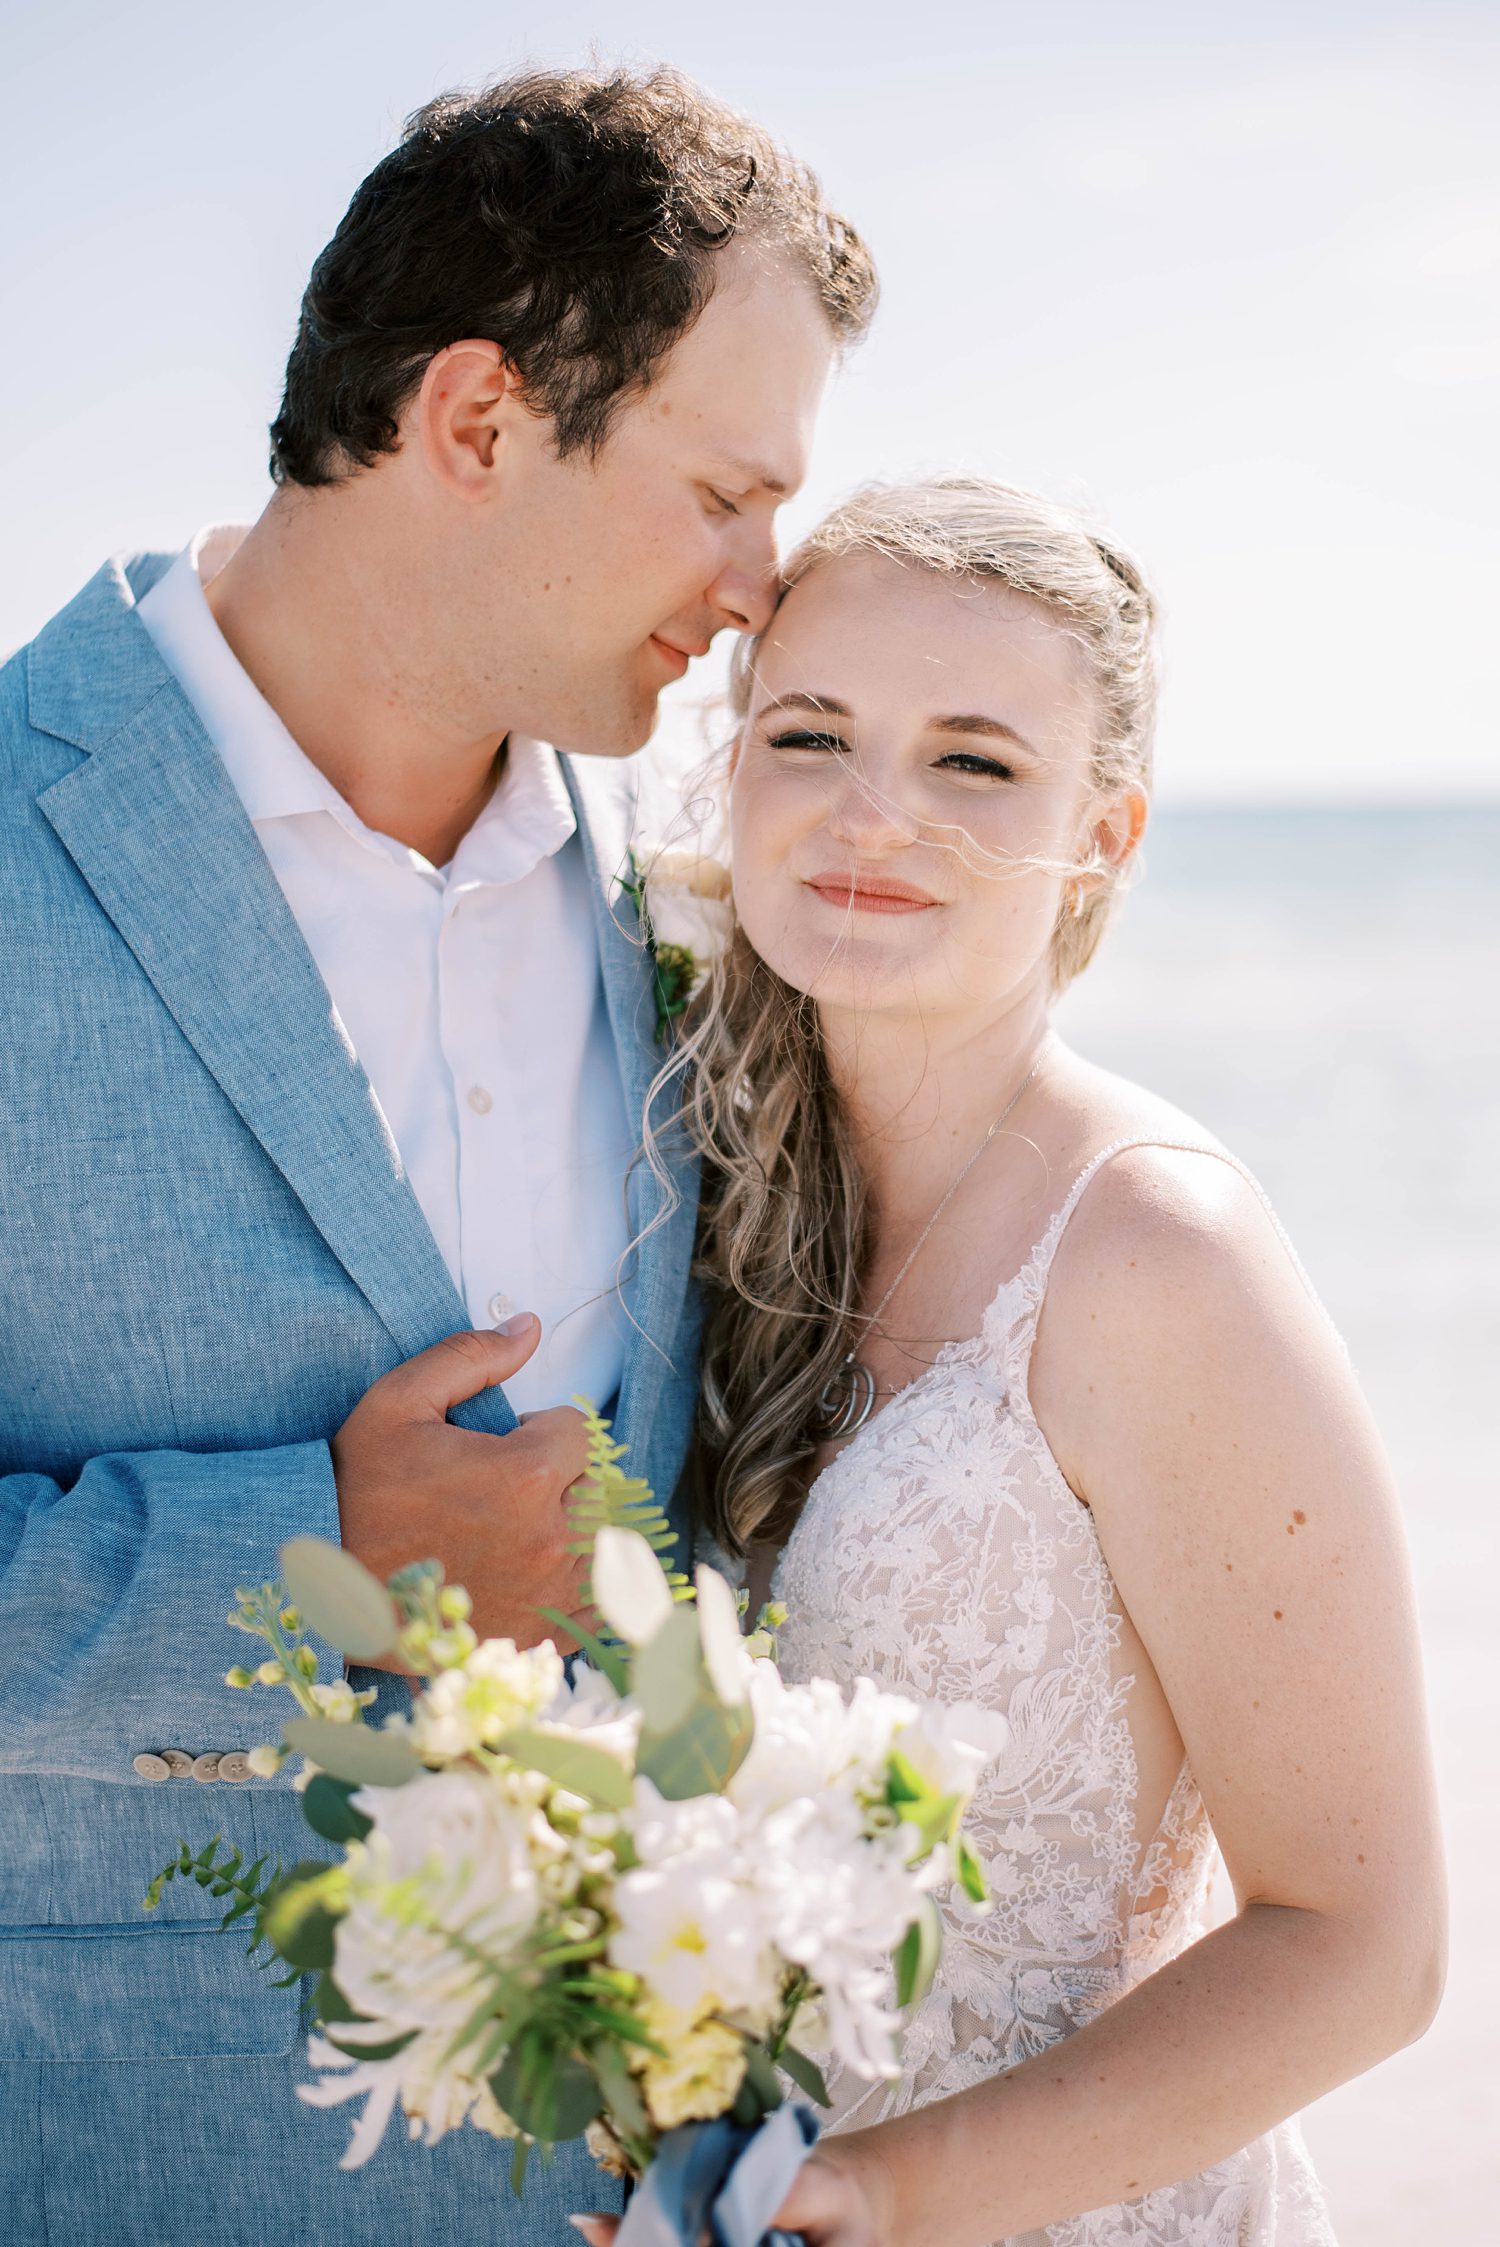 groom nuzzles bride's forehead during beach wedding photos